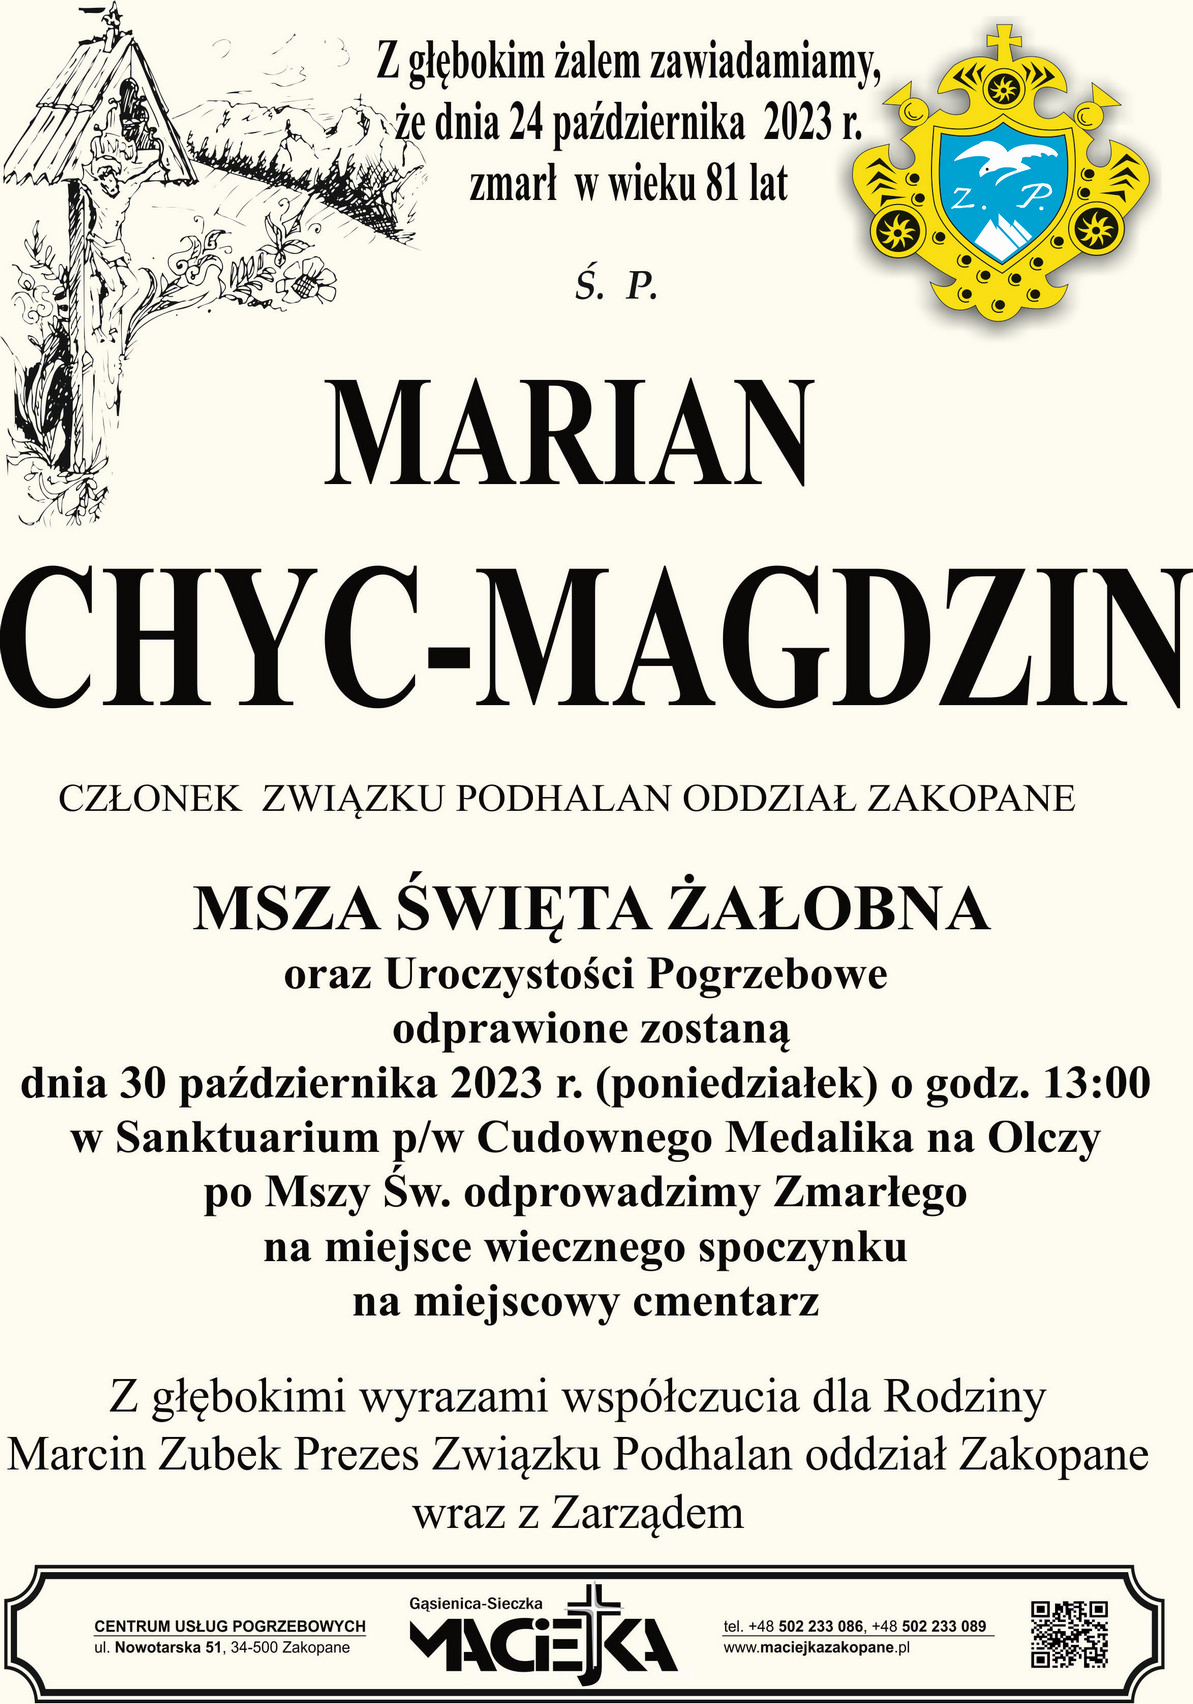 Marian Chyc-Magdzin